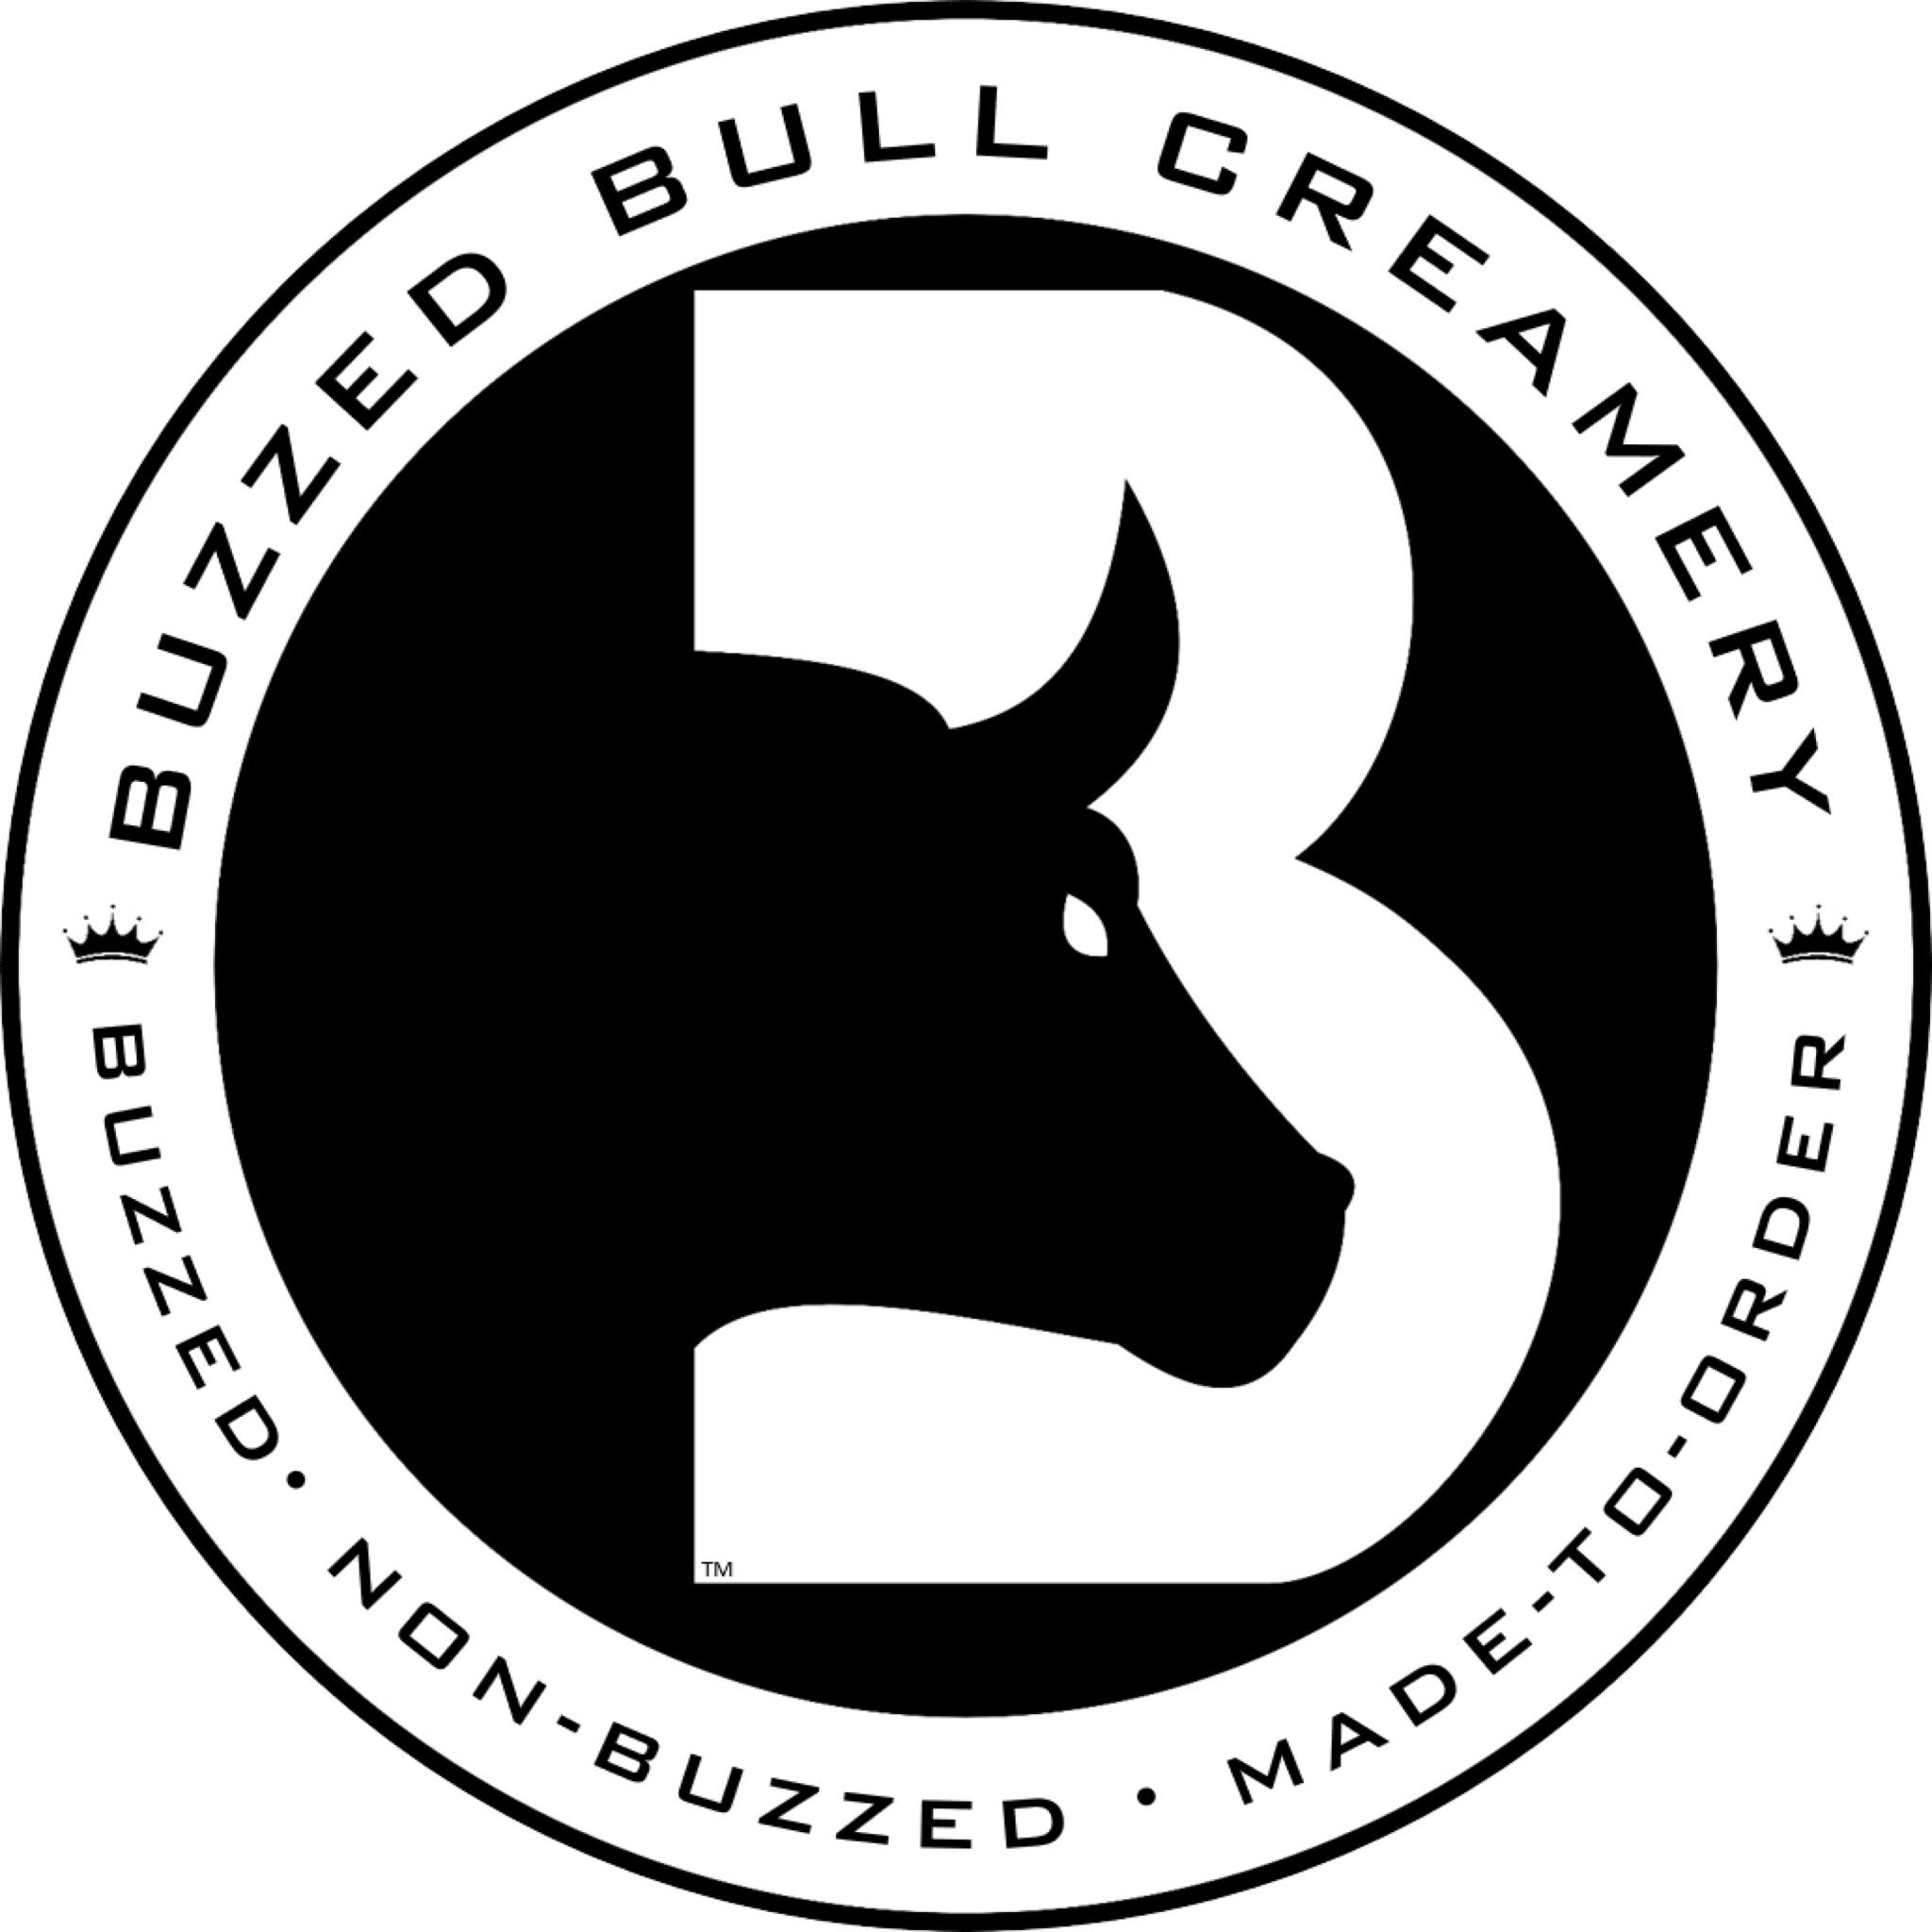 Buzzed Bull Creamery